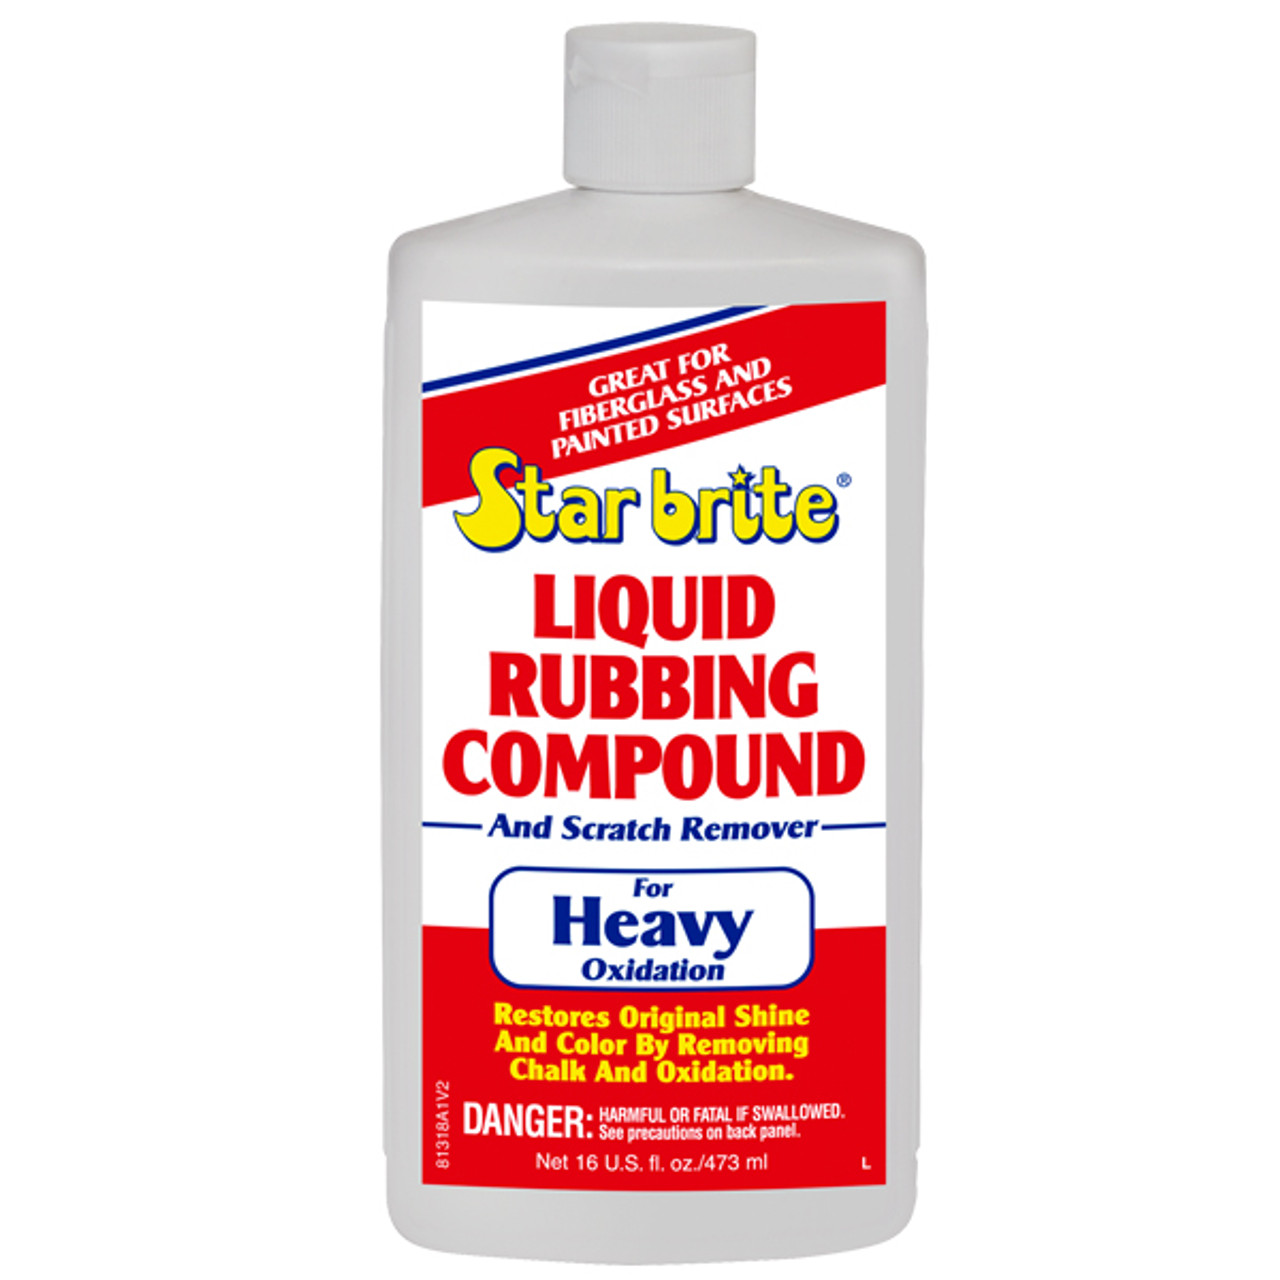 Star Brite Liquid Rubbing Compound Heavy Oxidation